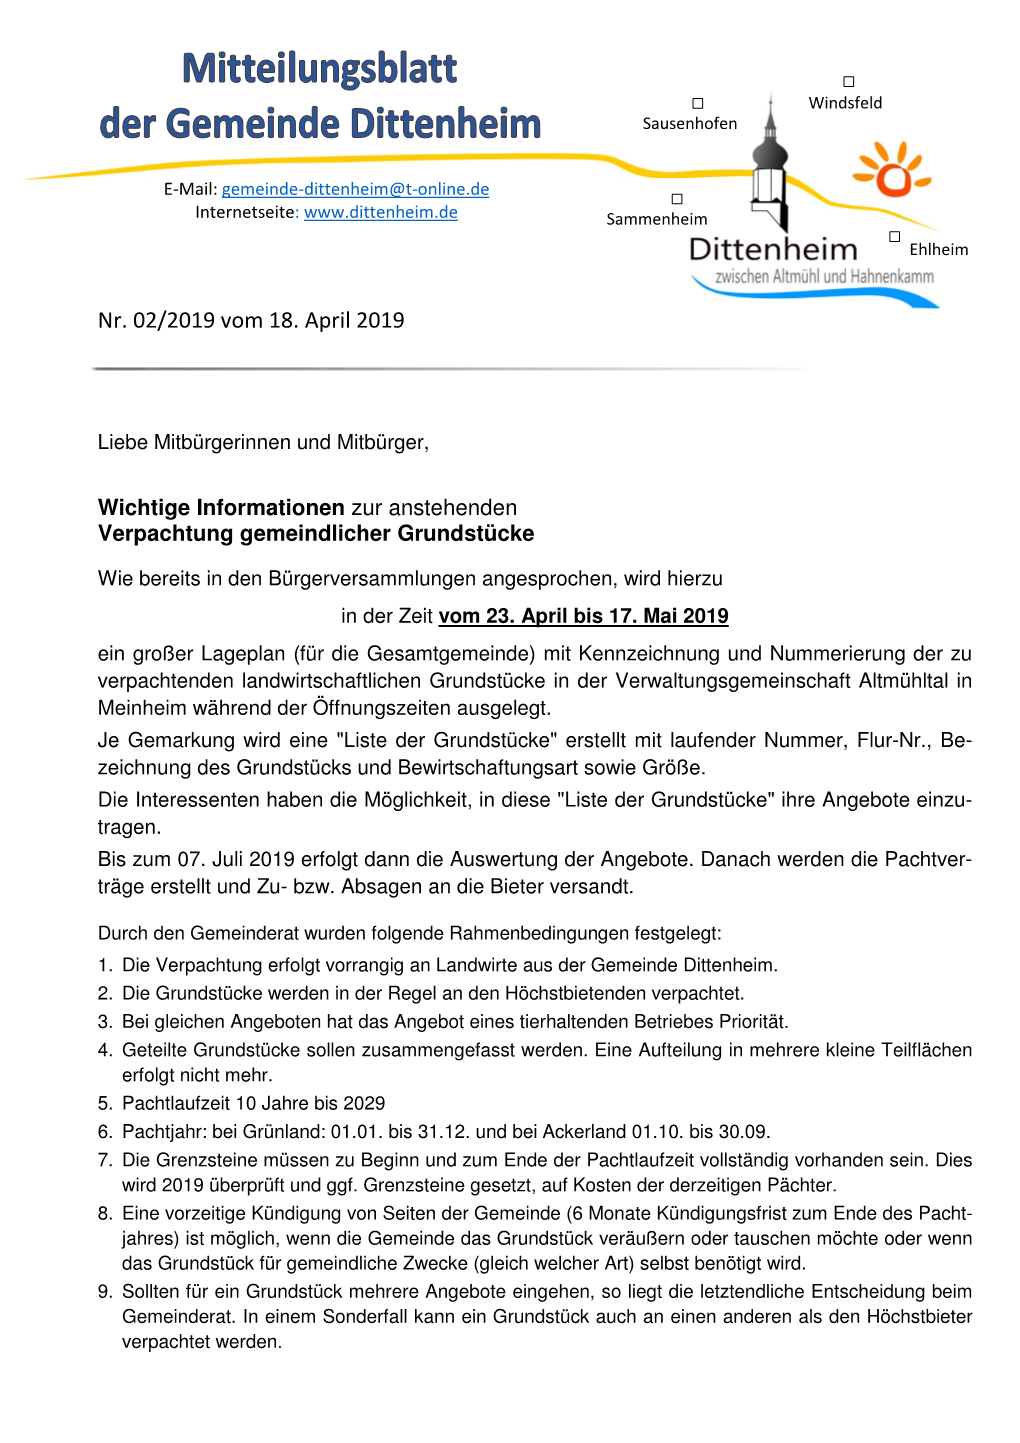 Mitteilungsblatt Dittenheim 02 2019